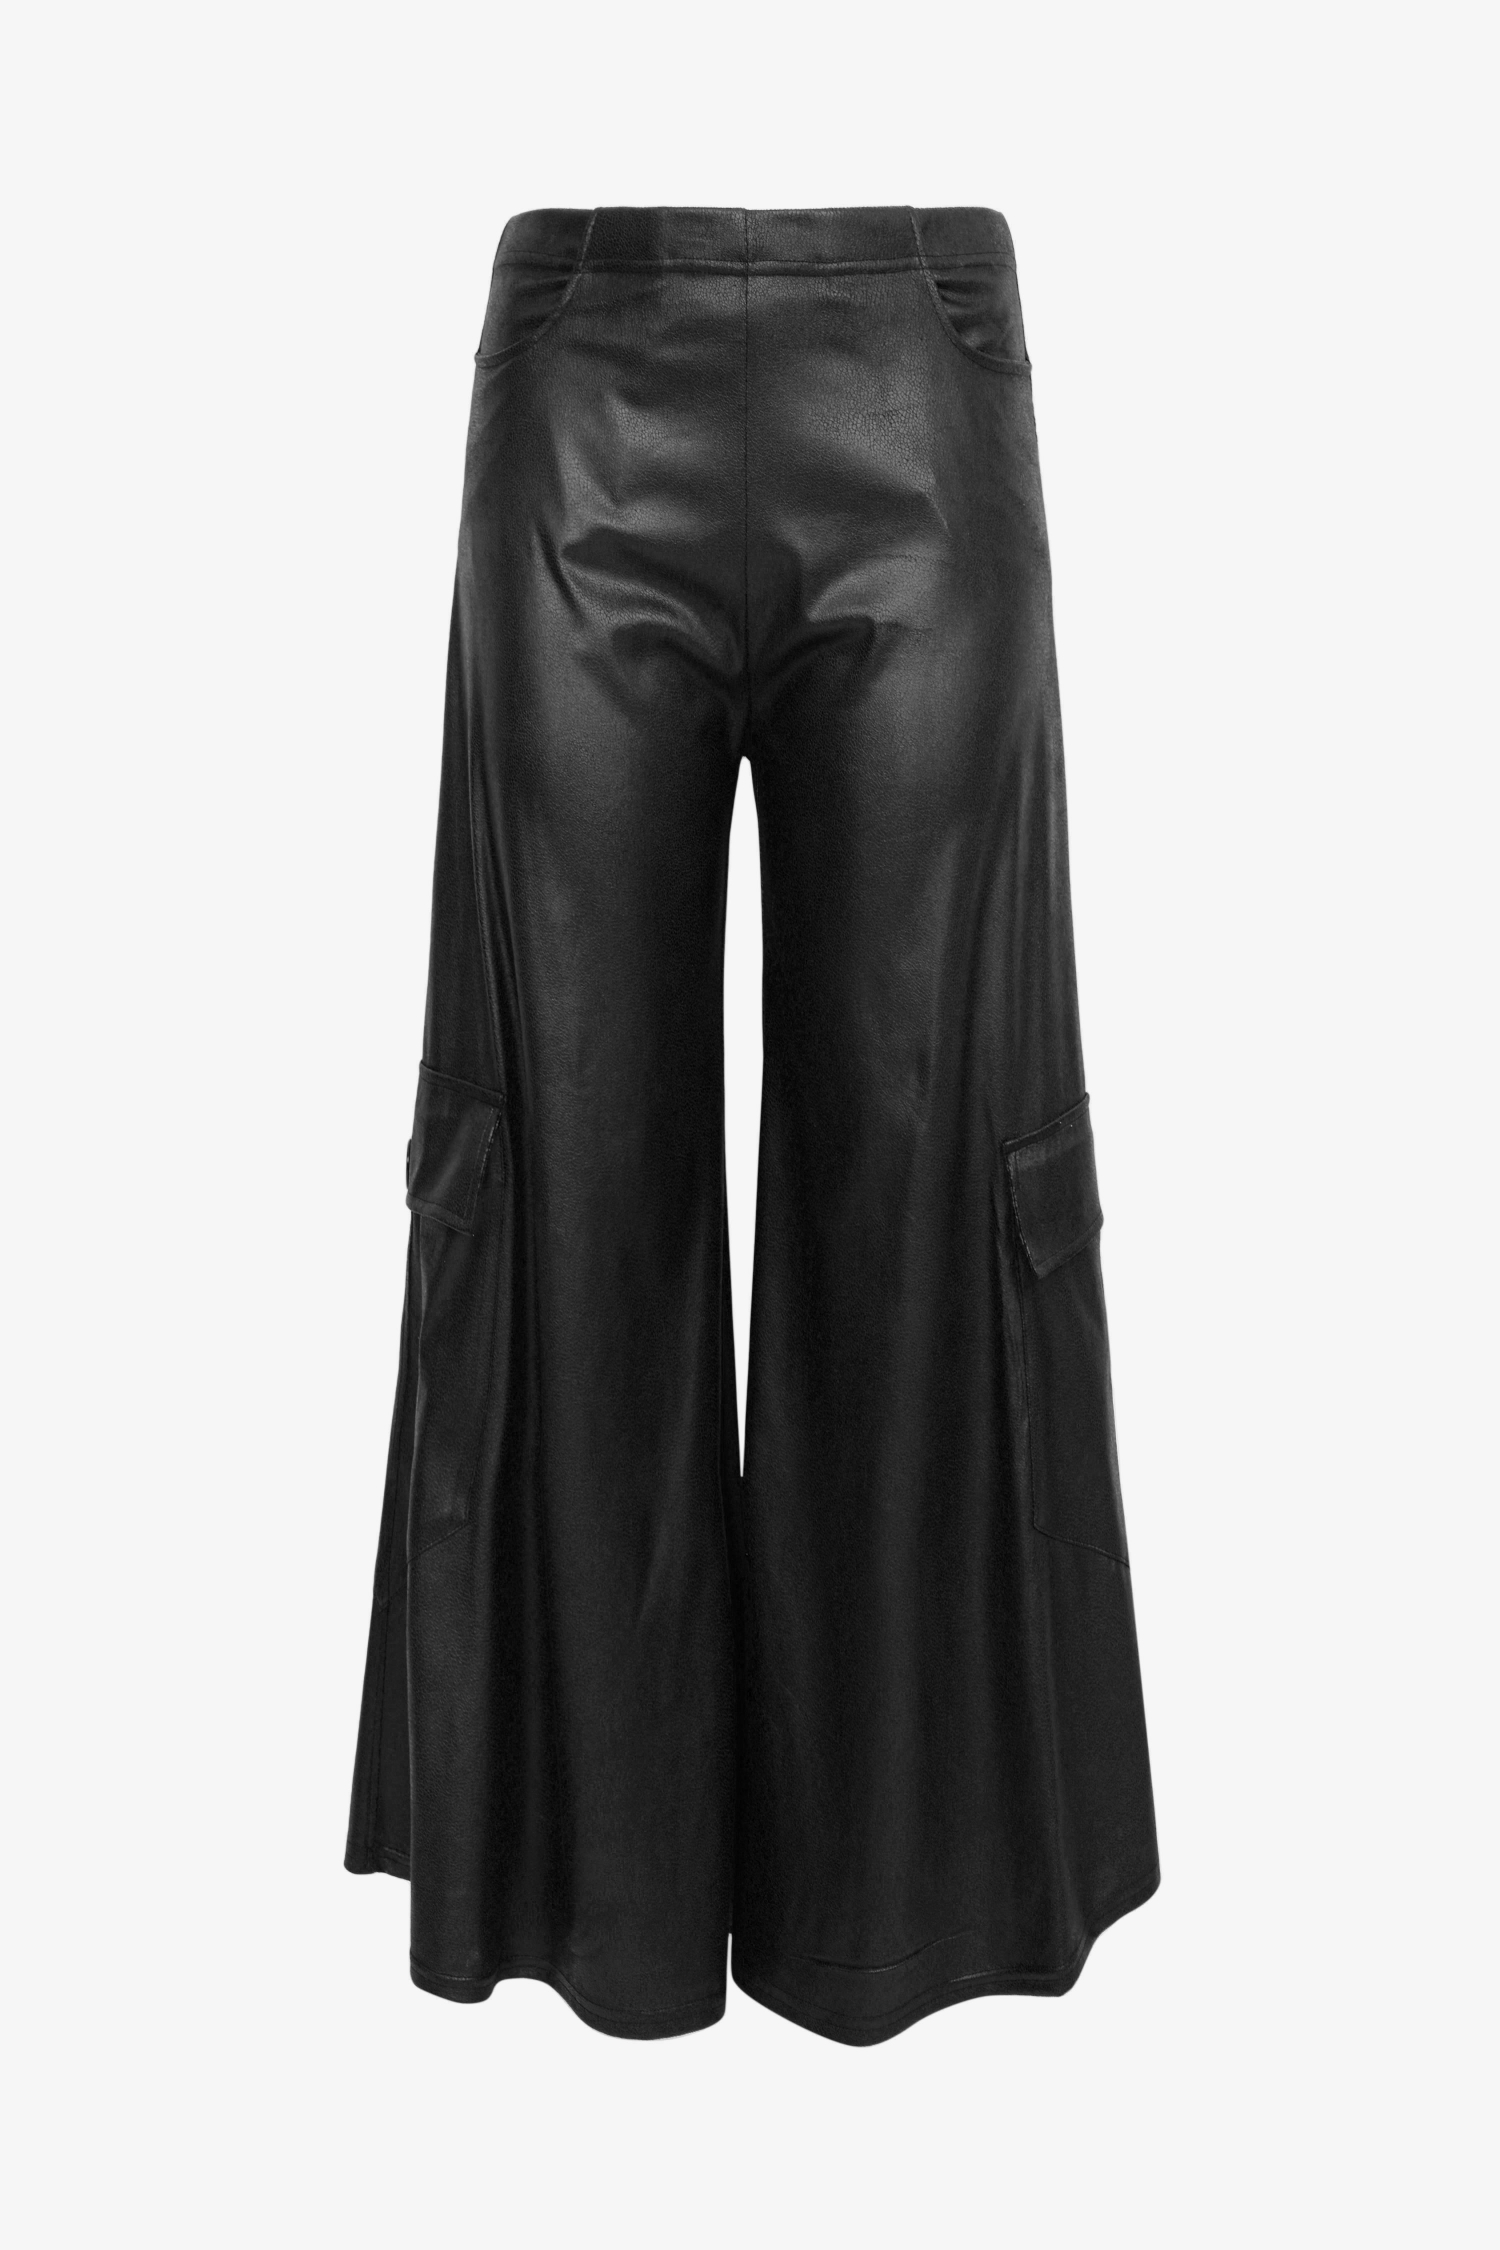 Vegan leather culotte skirt